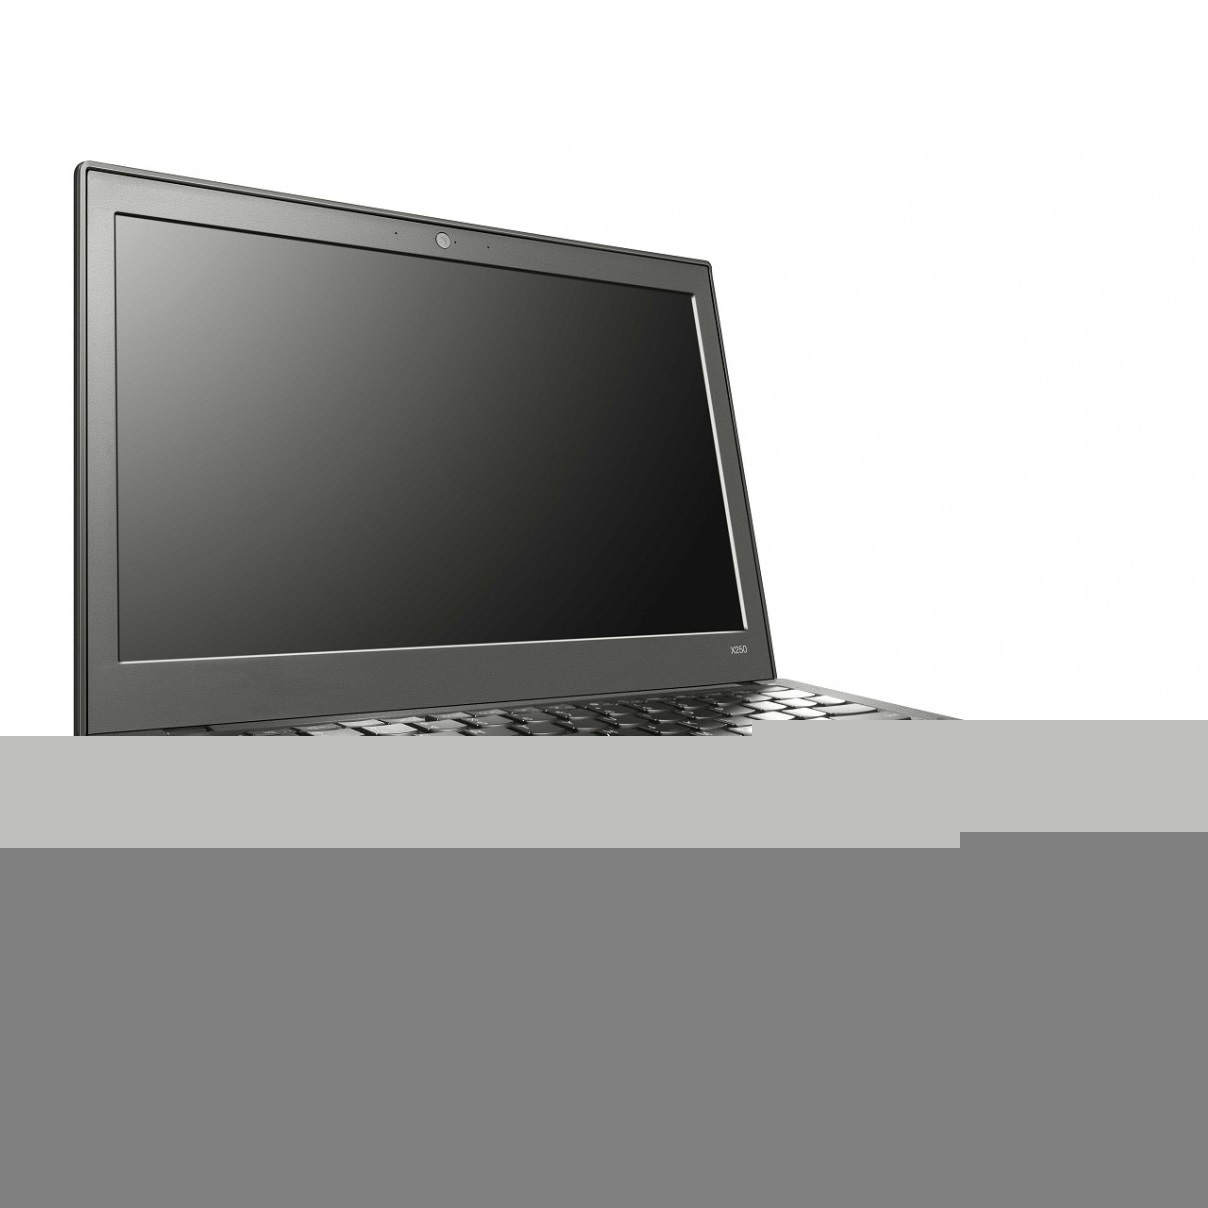 Laptop Lenovo Thinkpad X250 (20CLA00BVA) - Intel Core i7-5600U 2.6Ghz, 4GB RAM, 500GB HDD, VGA Intel HD Graphics, 12.5 inch